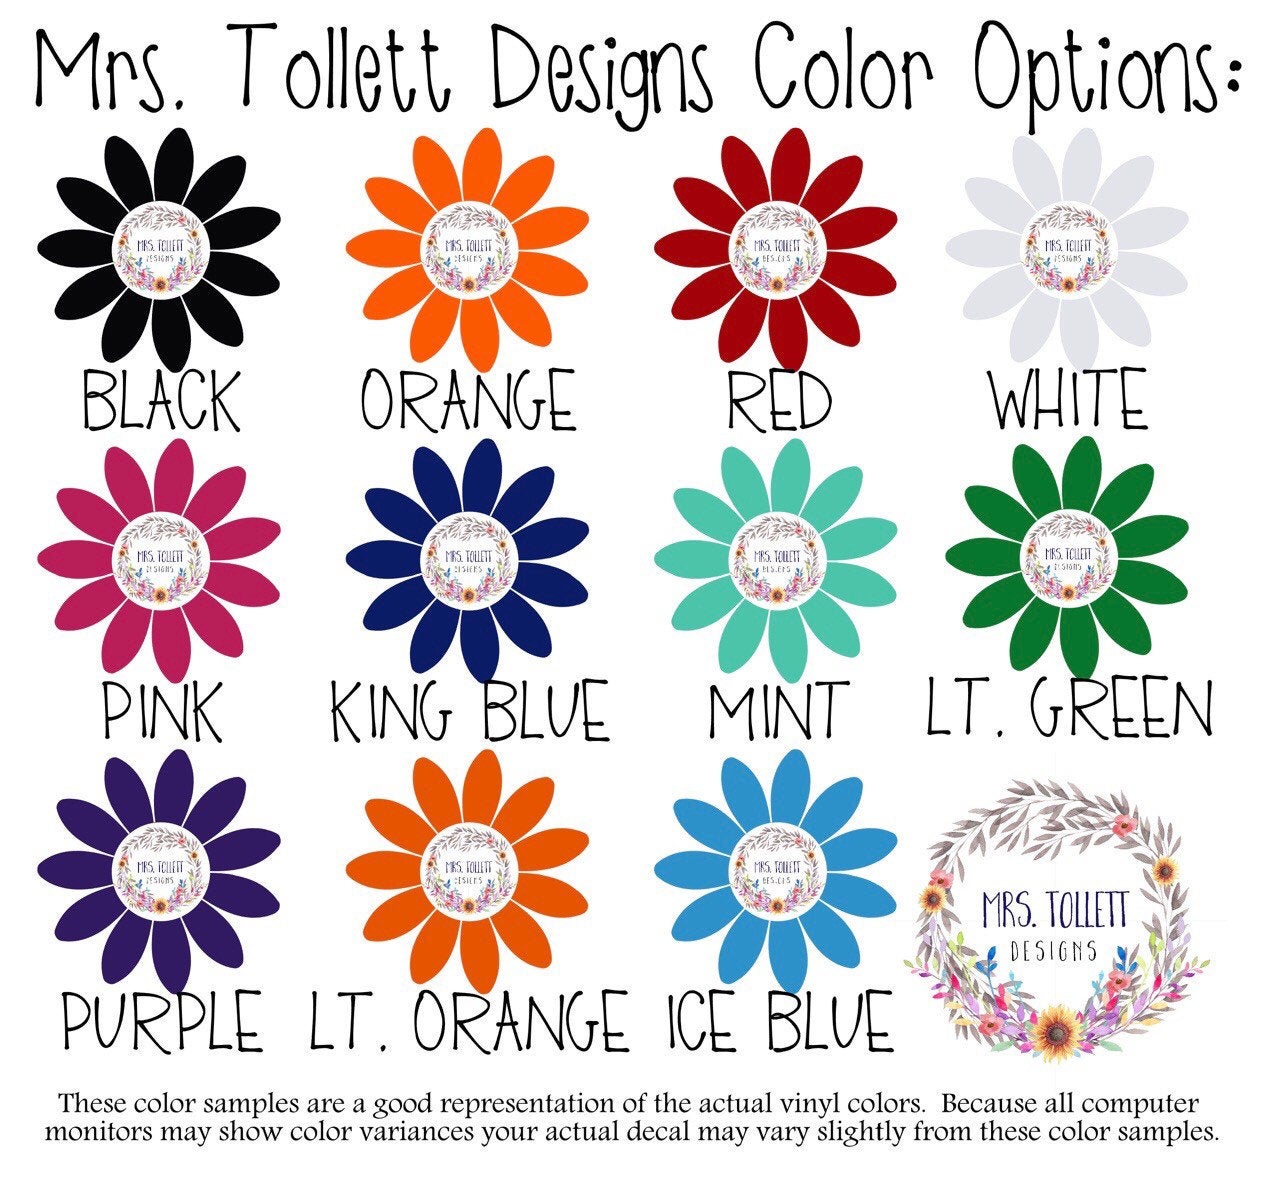 Mrs Tollett Designs Vinyl Color Chart 1, Black, Orange, Red, White, Pink, King Blue, Mint, Light Green, Purple, Light Orange, Ice Blue